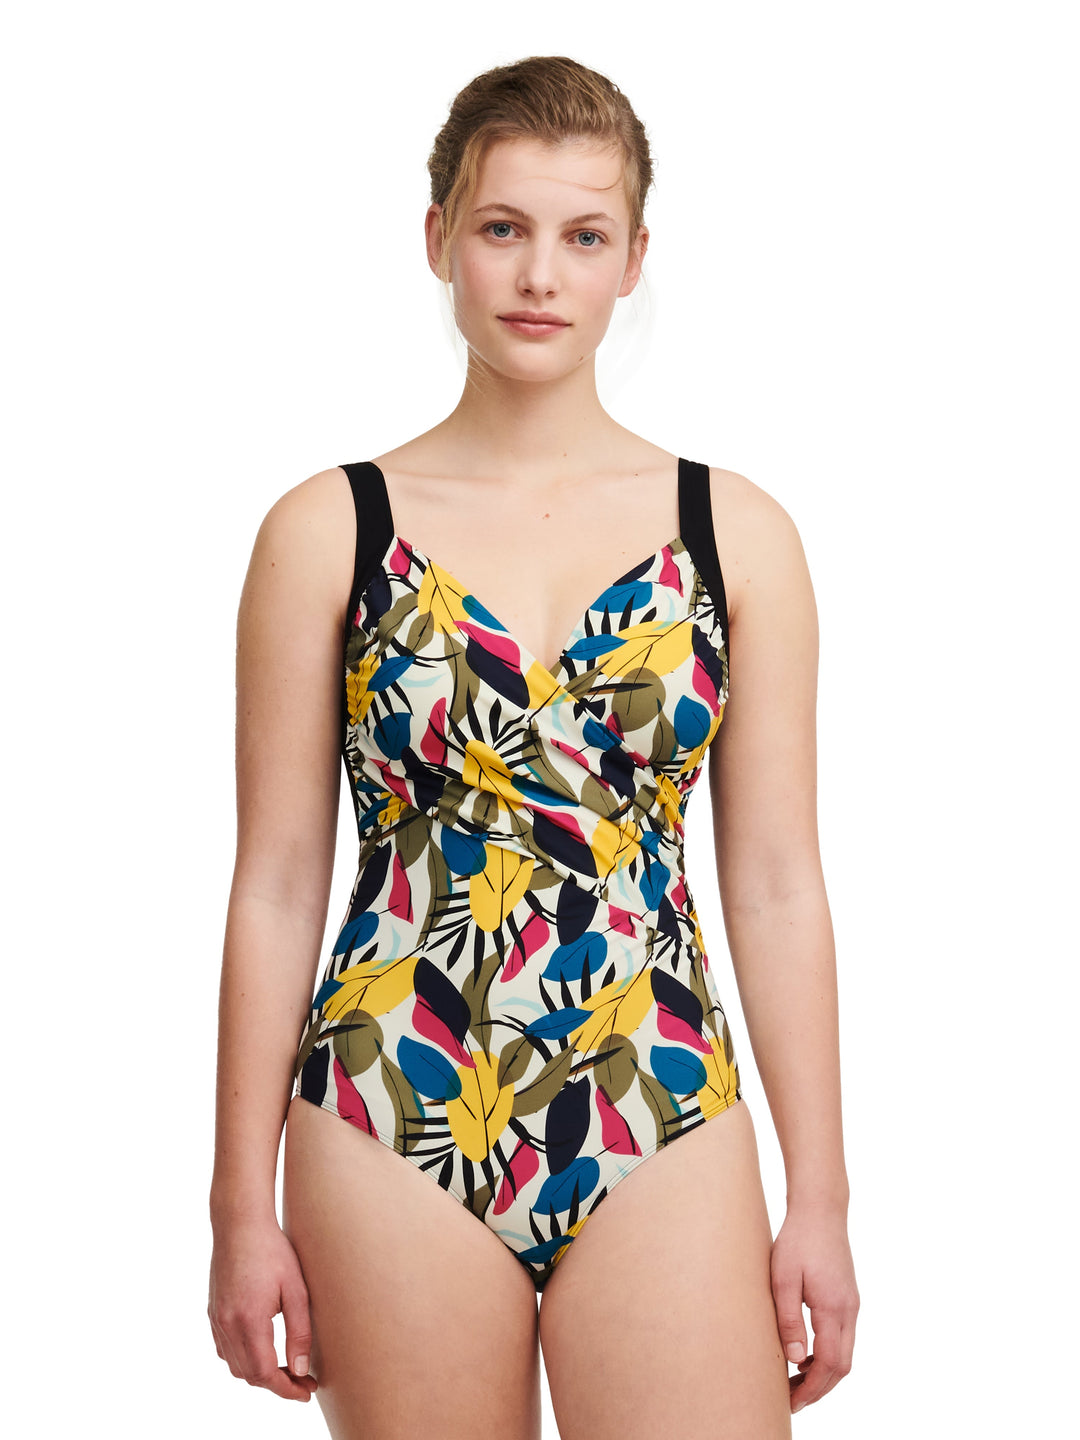 Femilet Swimwear - Honduras Wirefree Covering T-Shirt Swimsuit Multicolor Leaves Full Cup Swimsuit Femilet Swimwear 